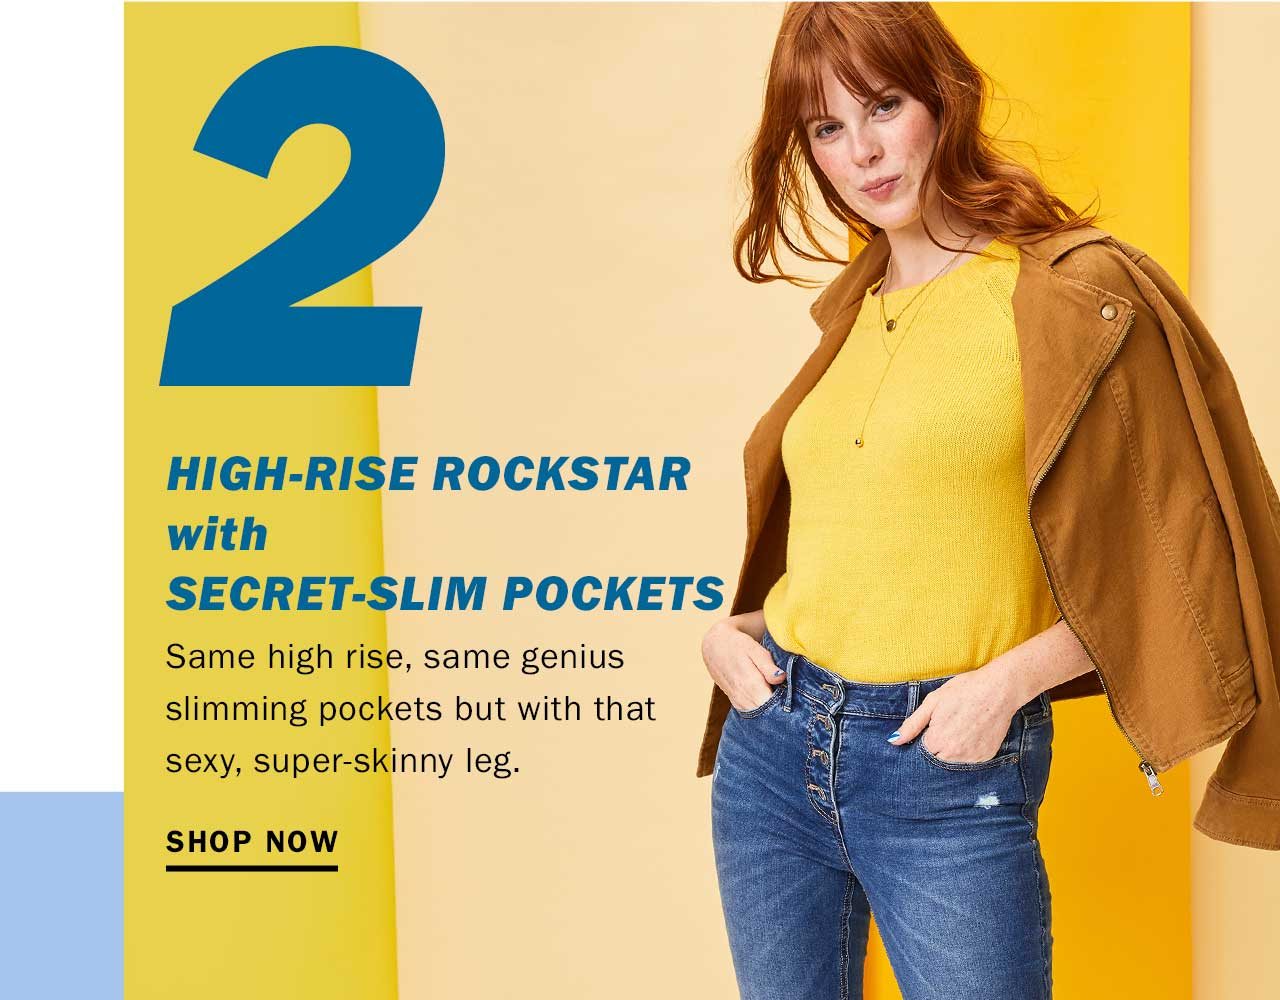 High-rise rockstar with secret-slim pockets